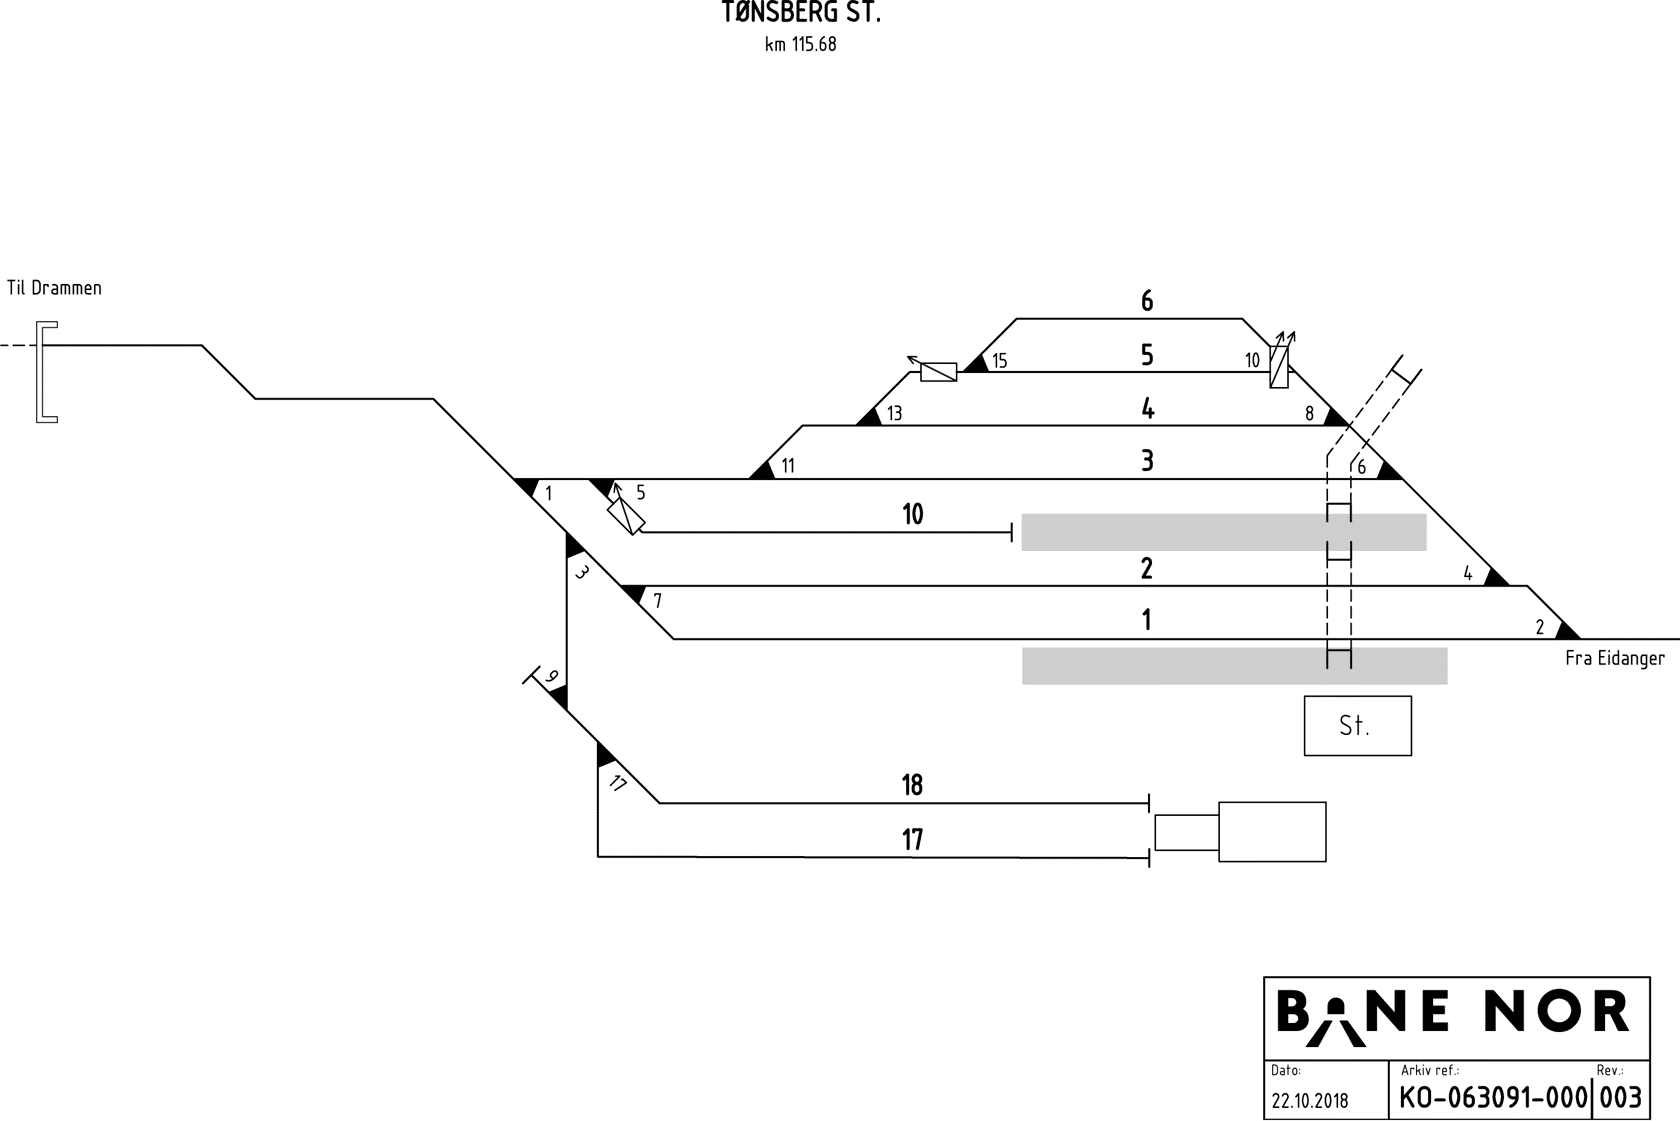 Track plan Tønsberg station